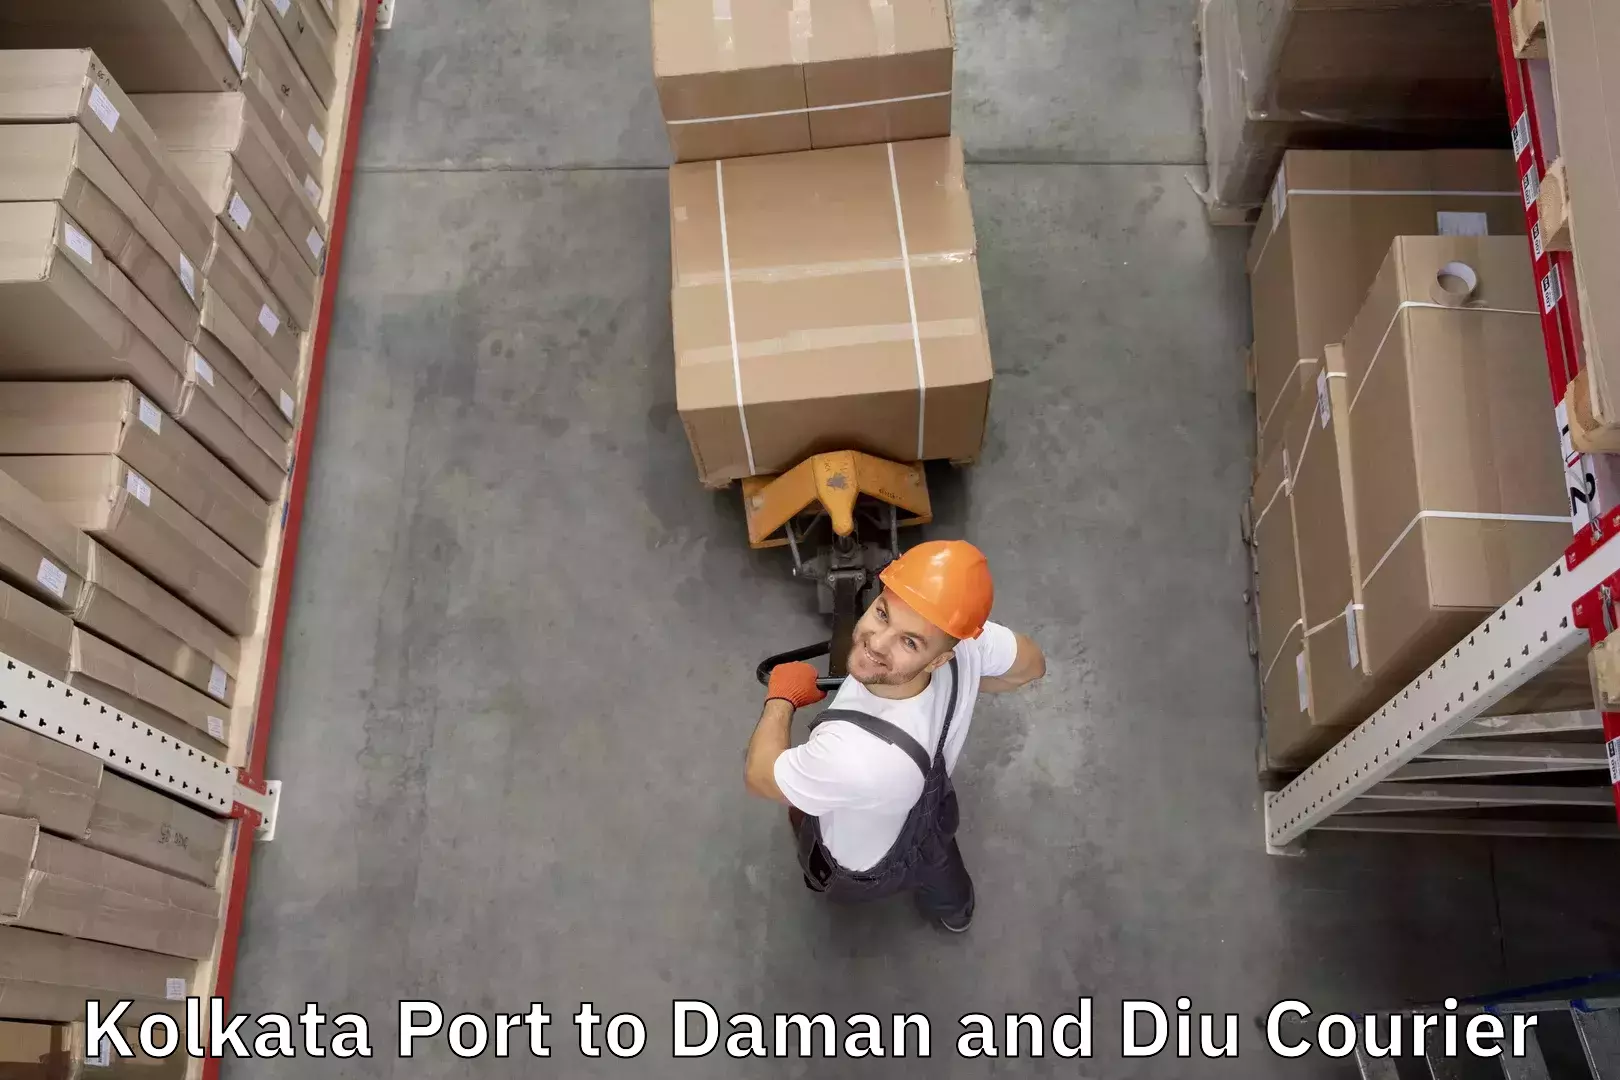 Baggage transport network Kolkata Port to Daman